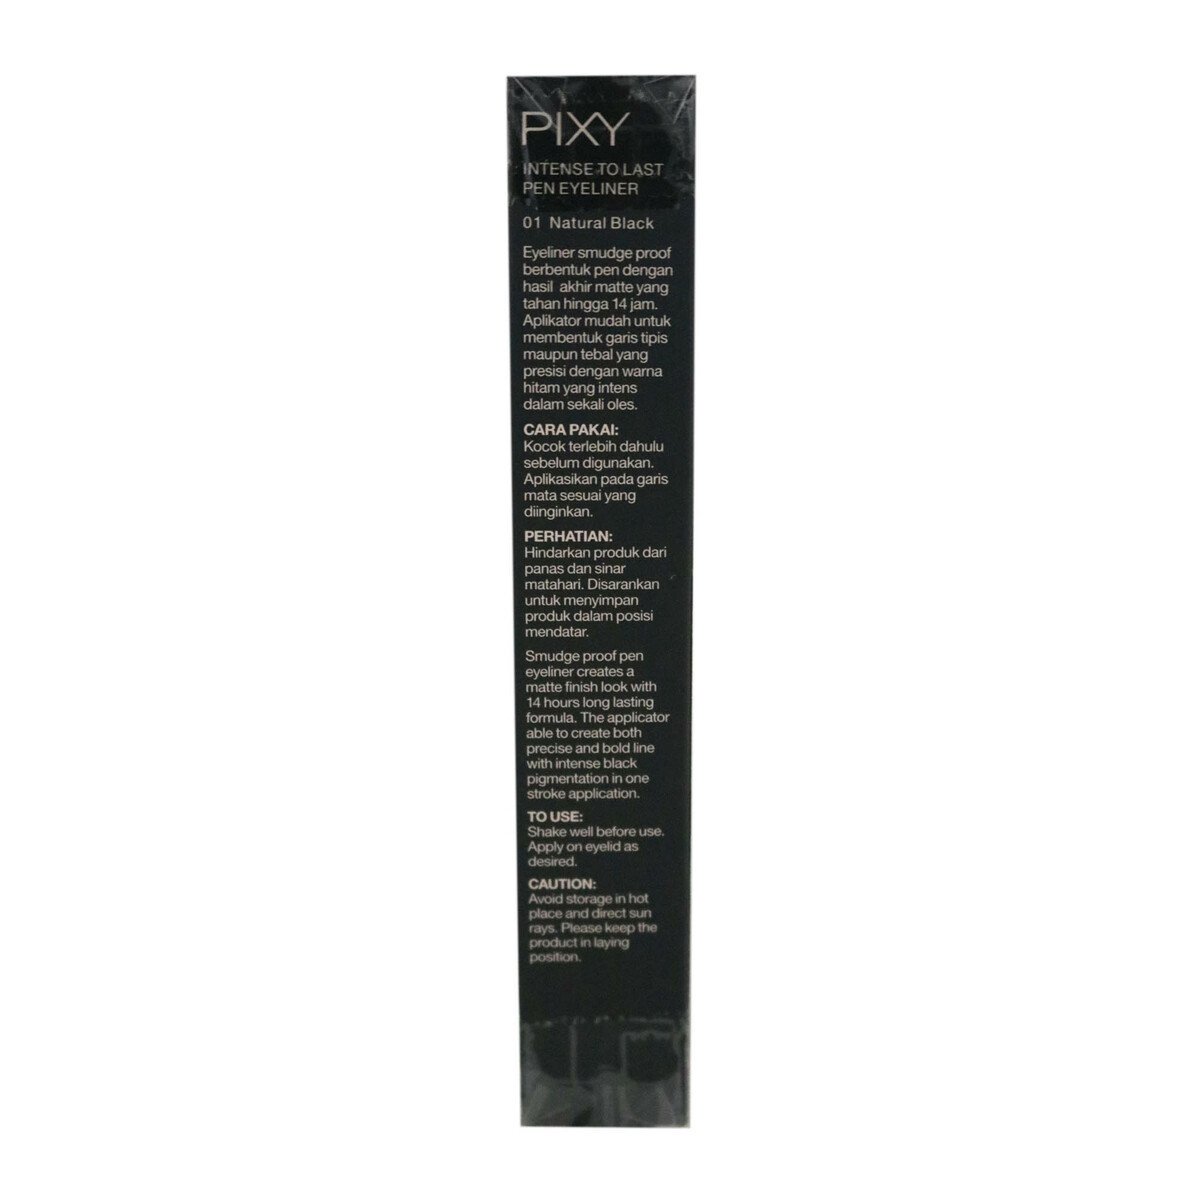 Pixy Intense To Last Pen Eyeliner 01 Natural 35g